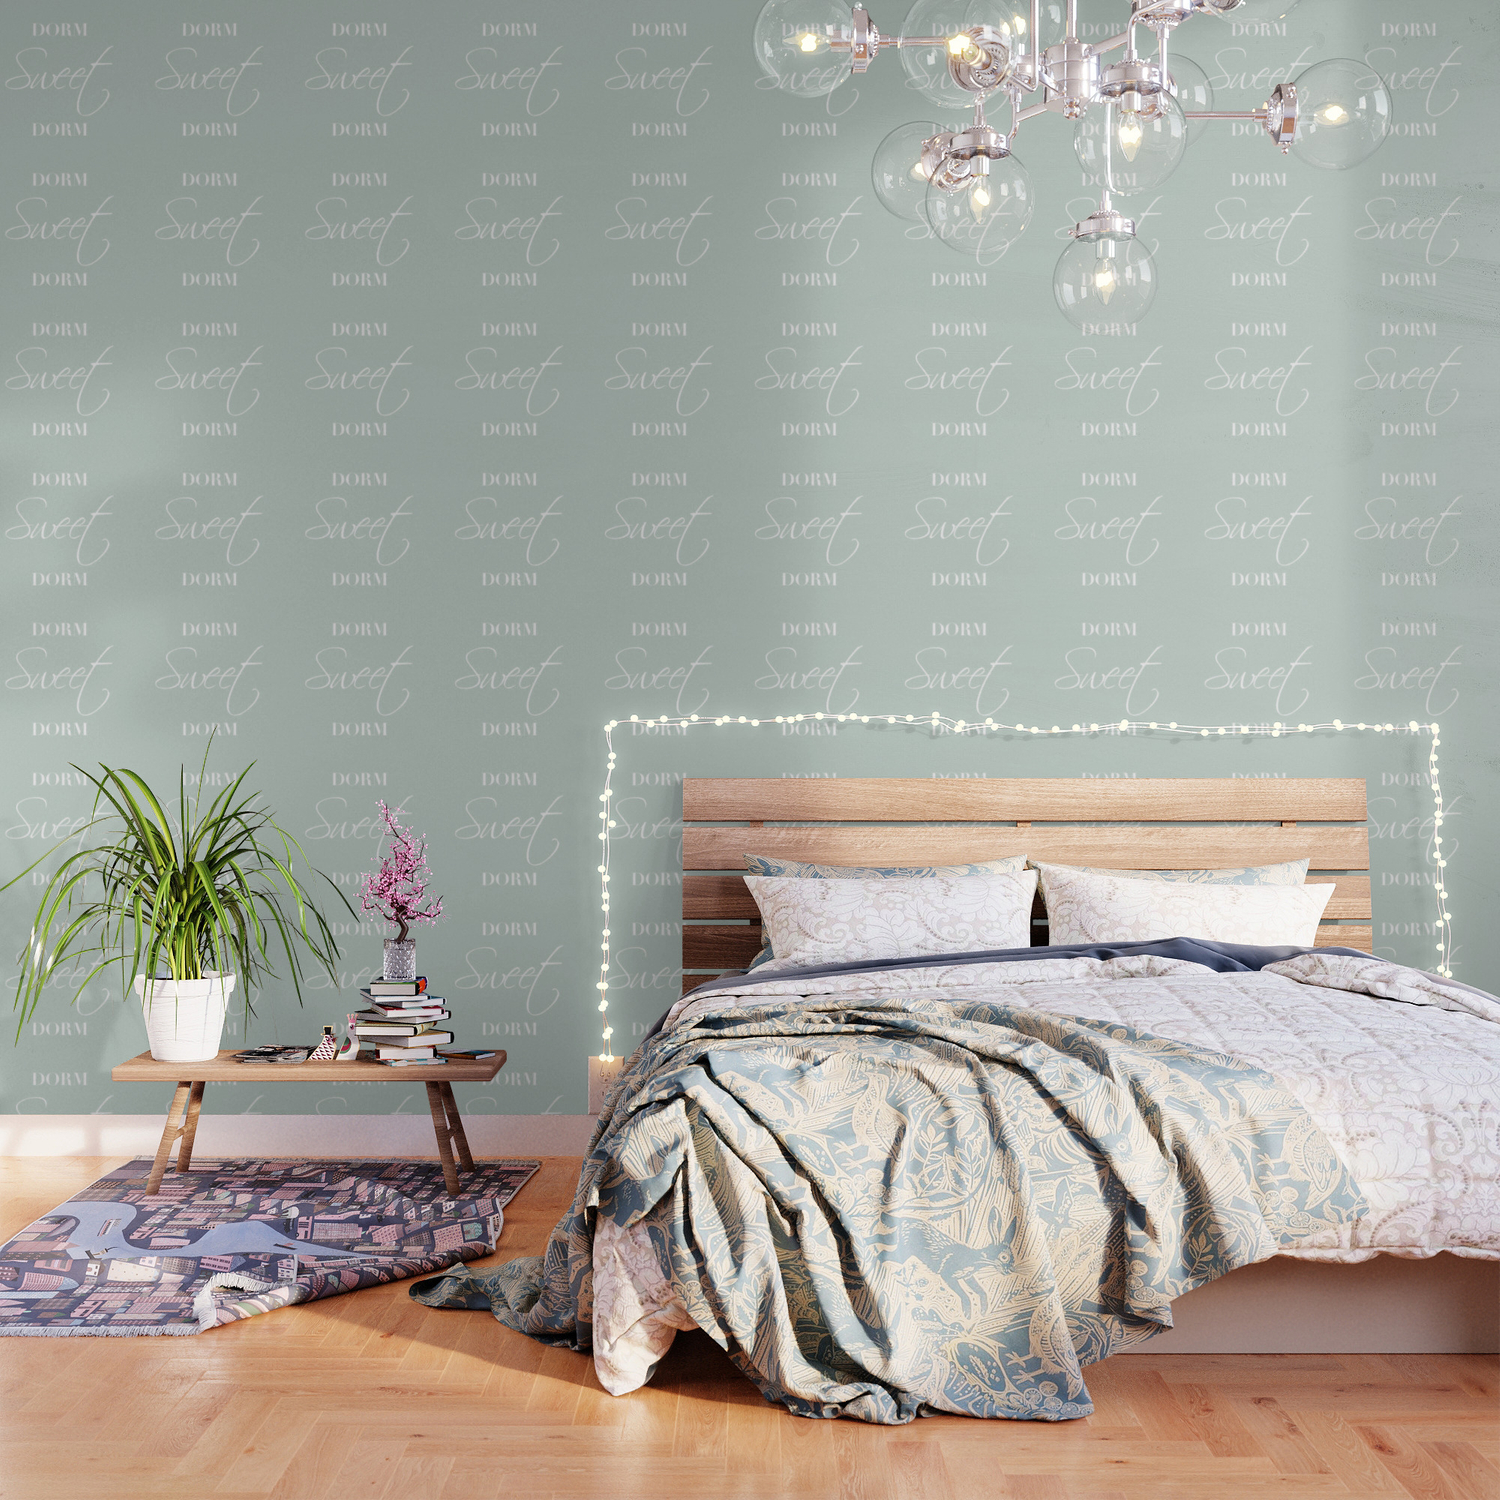 Dorm Sweet Wallpaper By Typutopia Society6